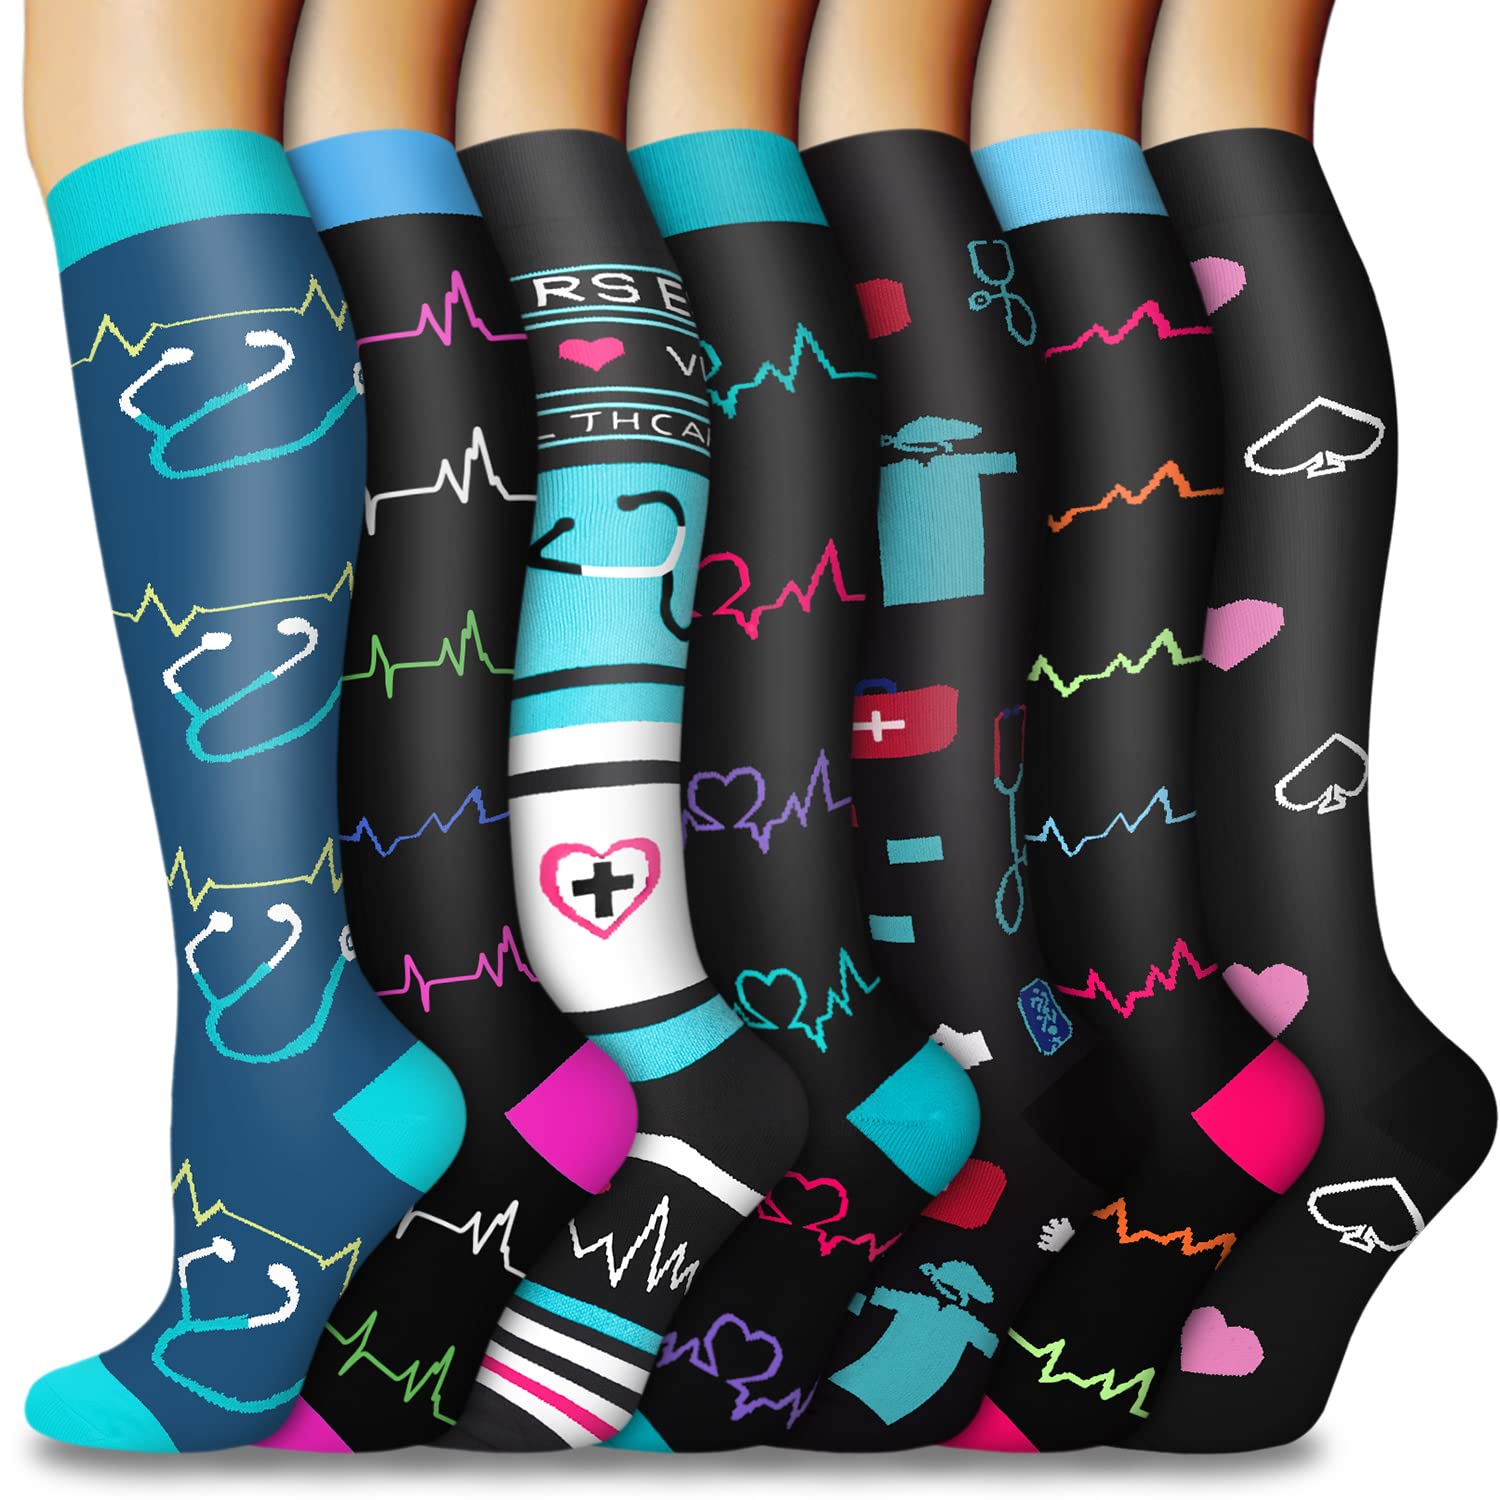 Cthh 7 Pairs Compression Socks For Women Men Circulation 20-30Mmhg - Best Support For Running Athletics Nursing Travel (22 Nurse